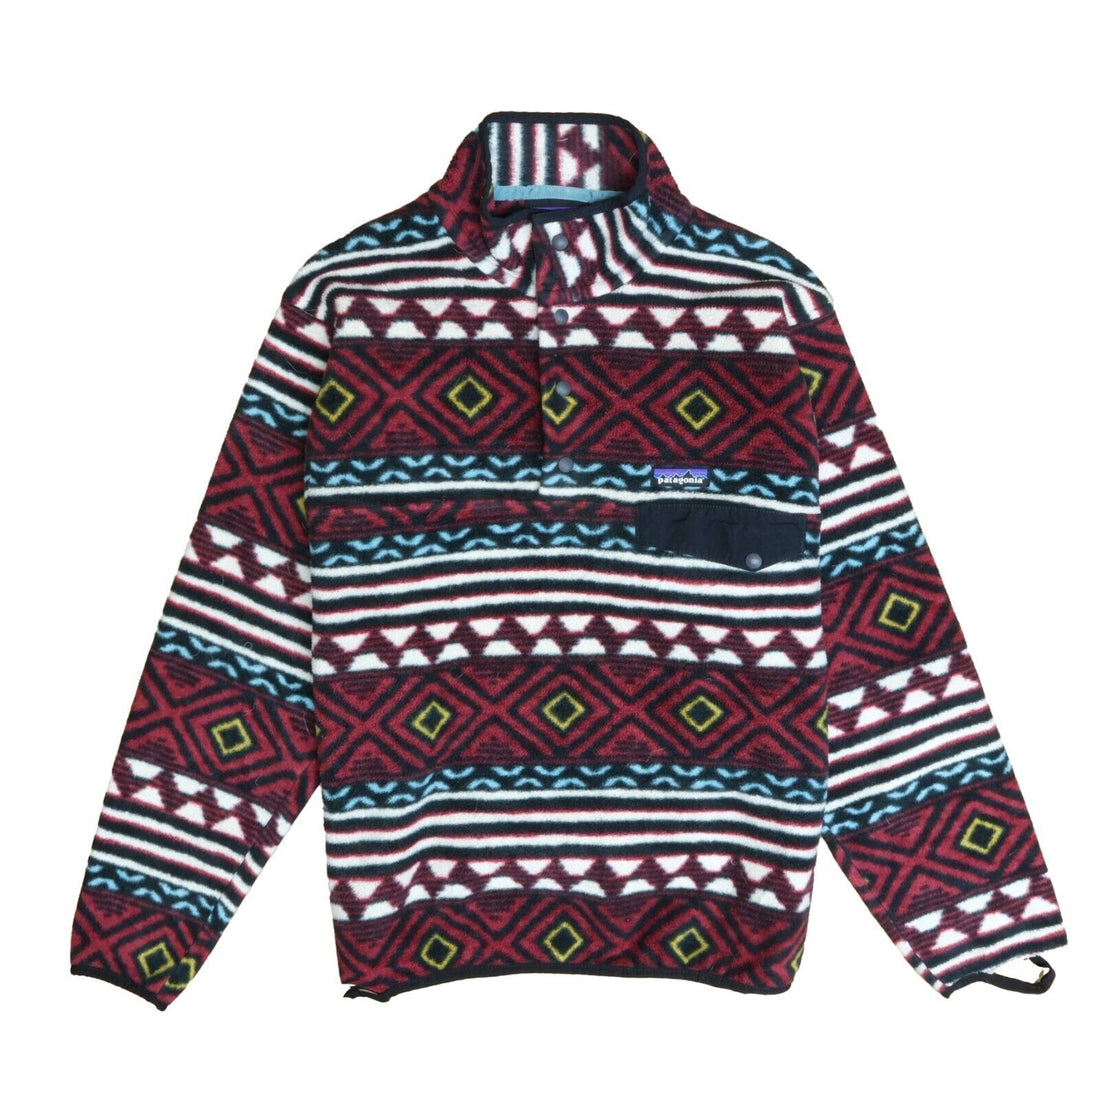 Vintage Patagonia Synchilla Snap-T Fleece Jacket Size Small